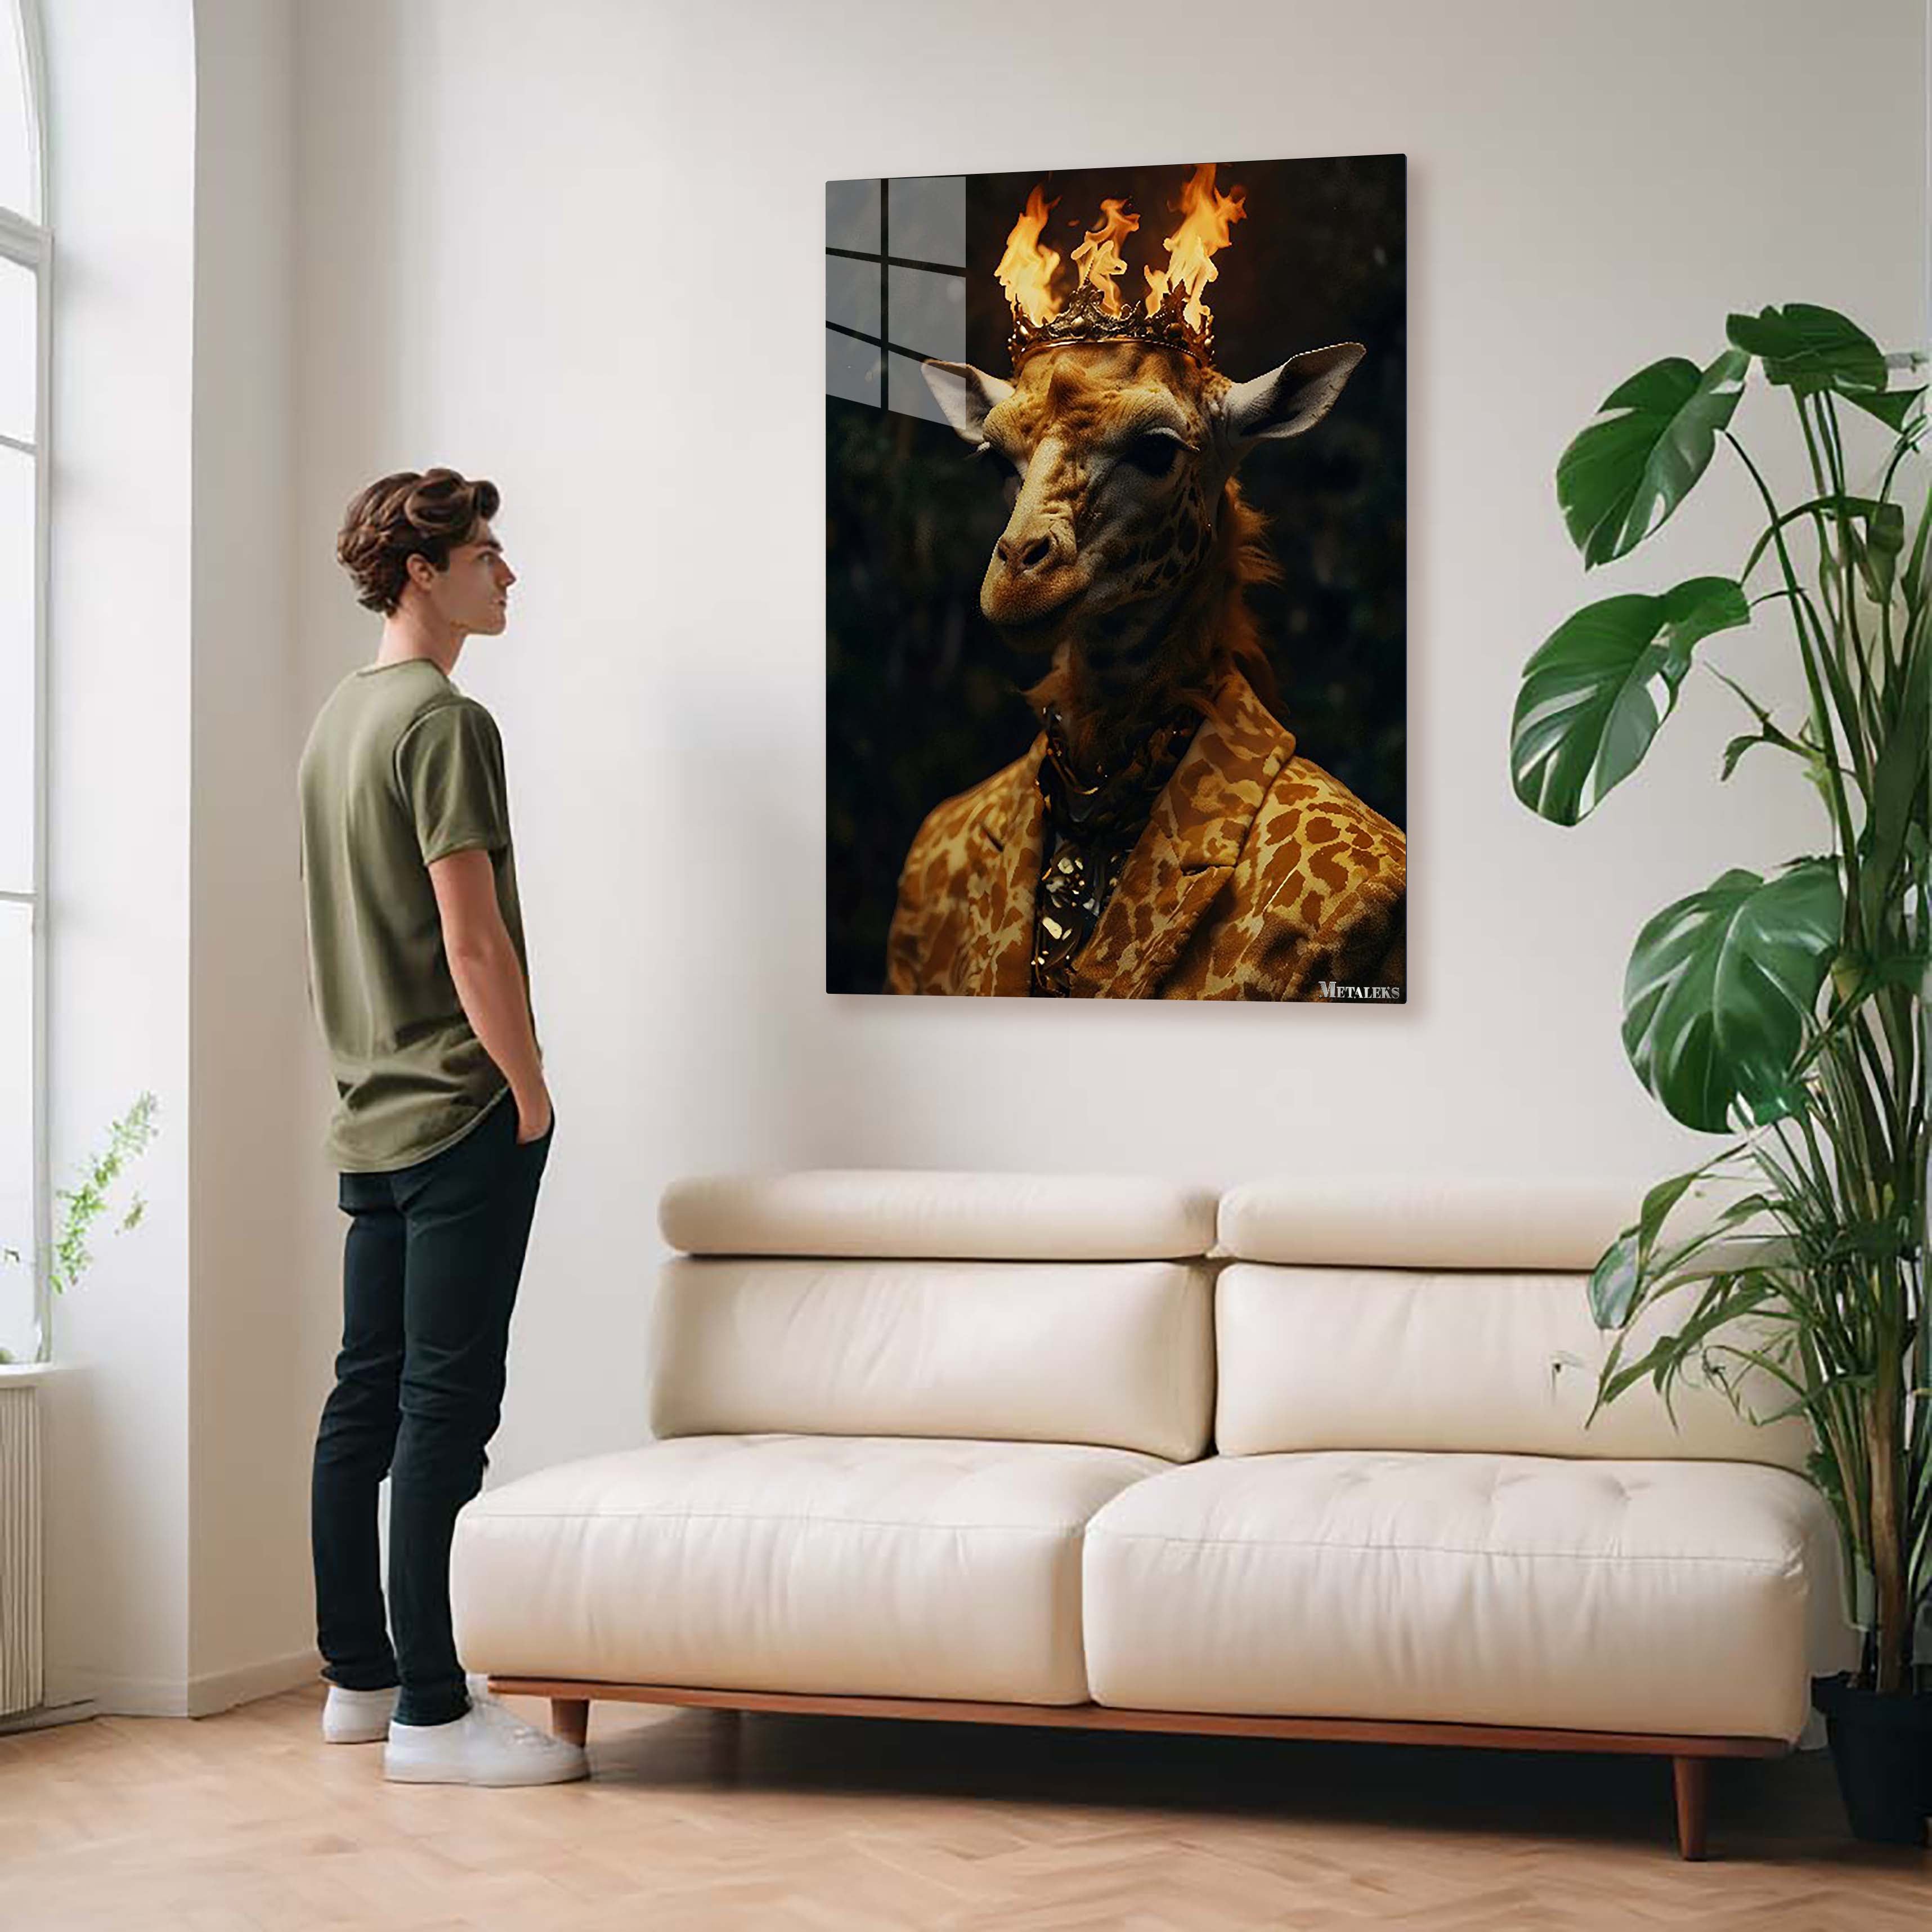 Giraffe King with crown on fire-designed by @eralidigitalart